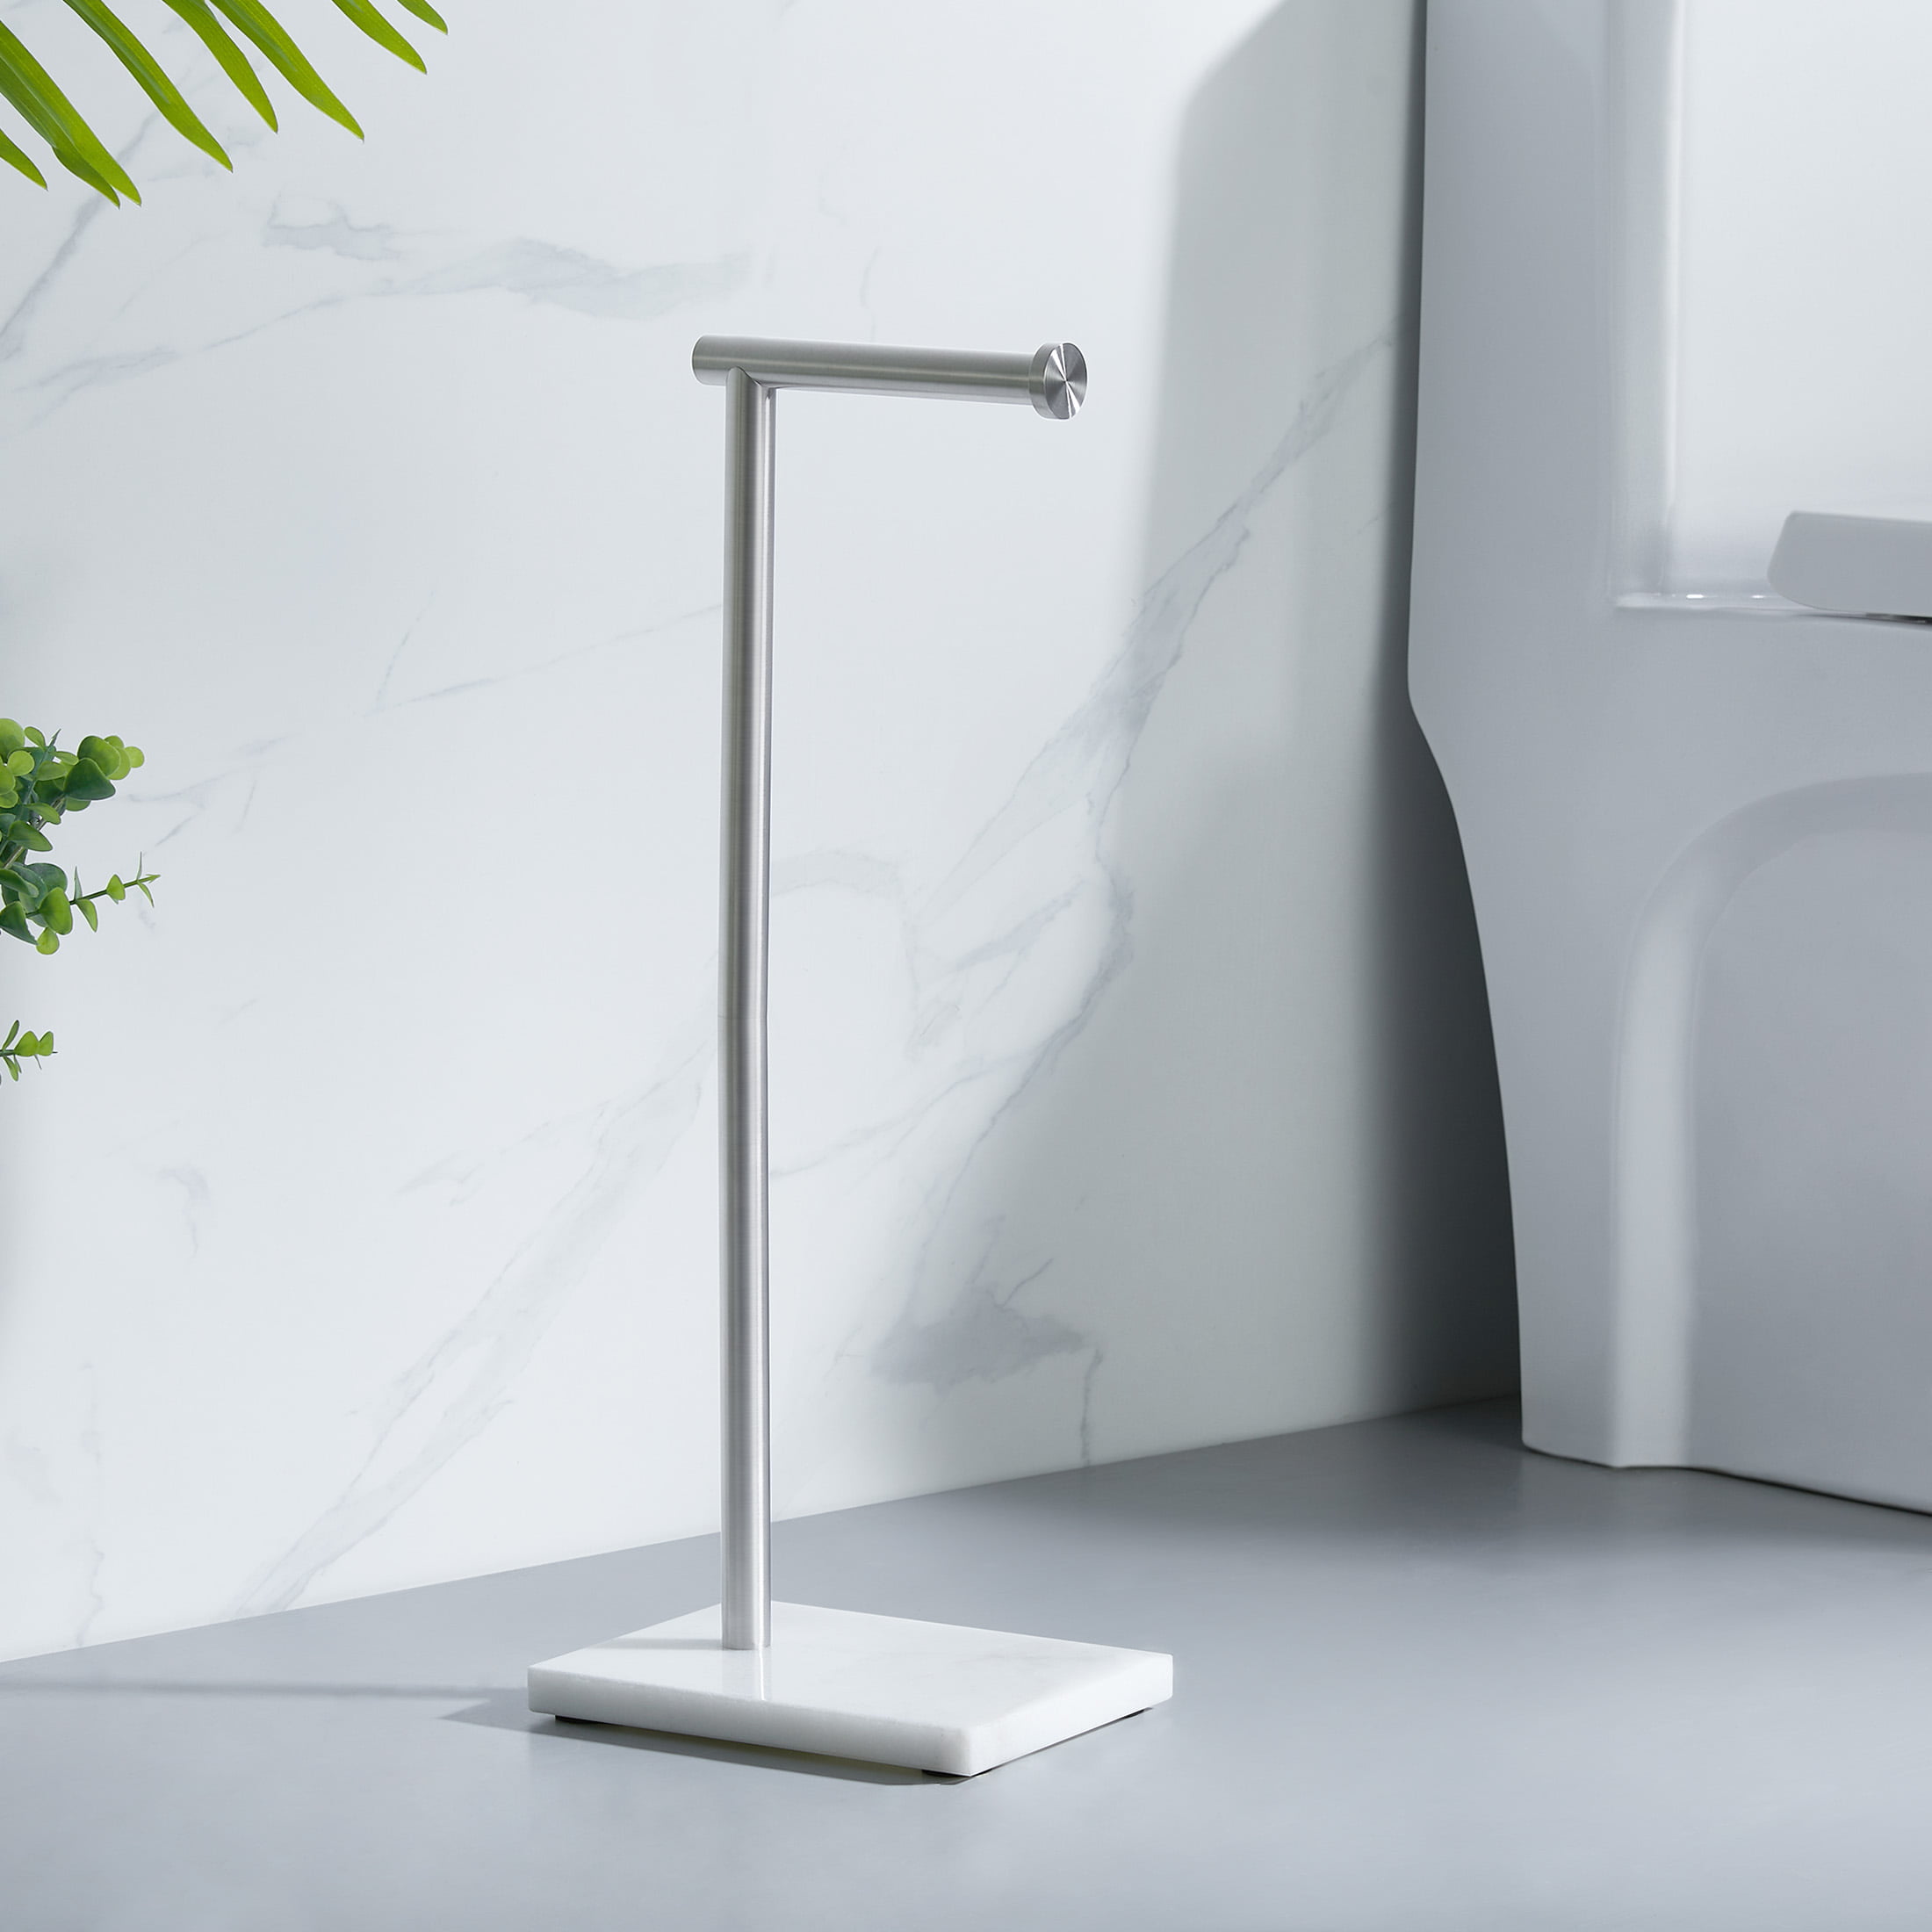 Standing Toilet Paper Holder丨Holder Stand with Modern Marble Base丨Free –  hitslam